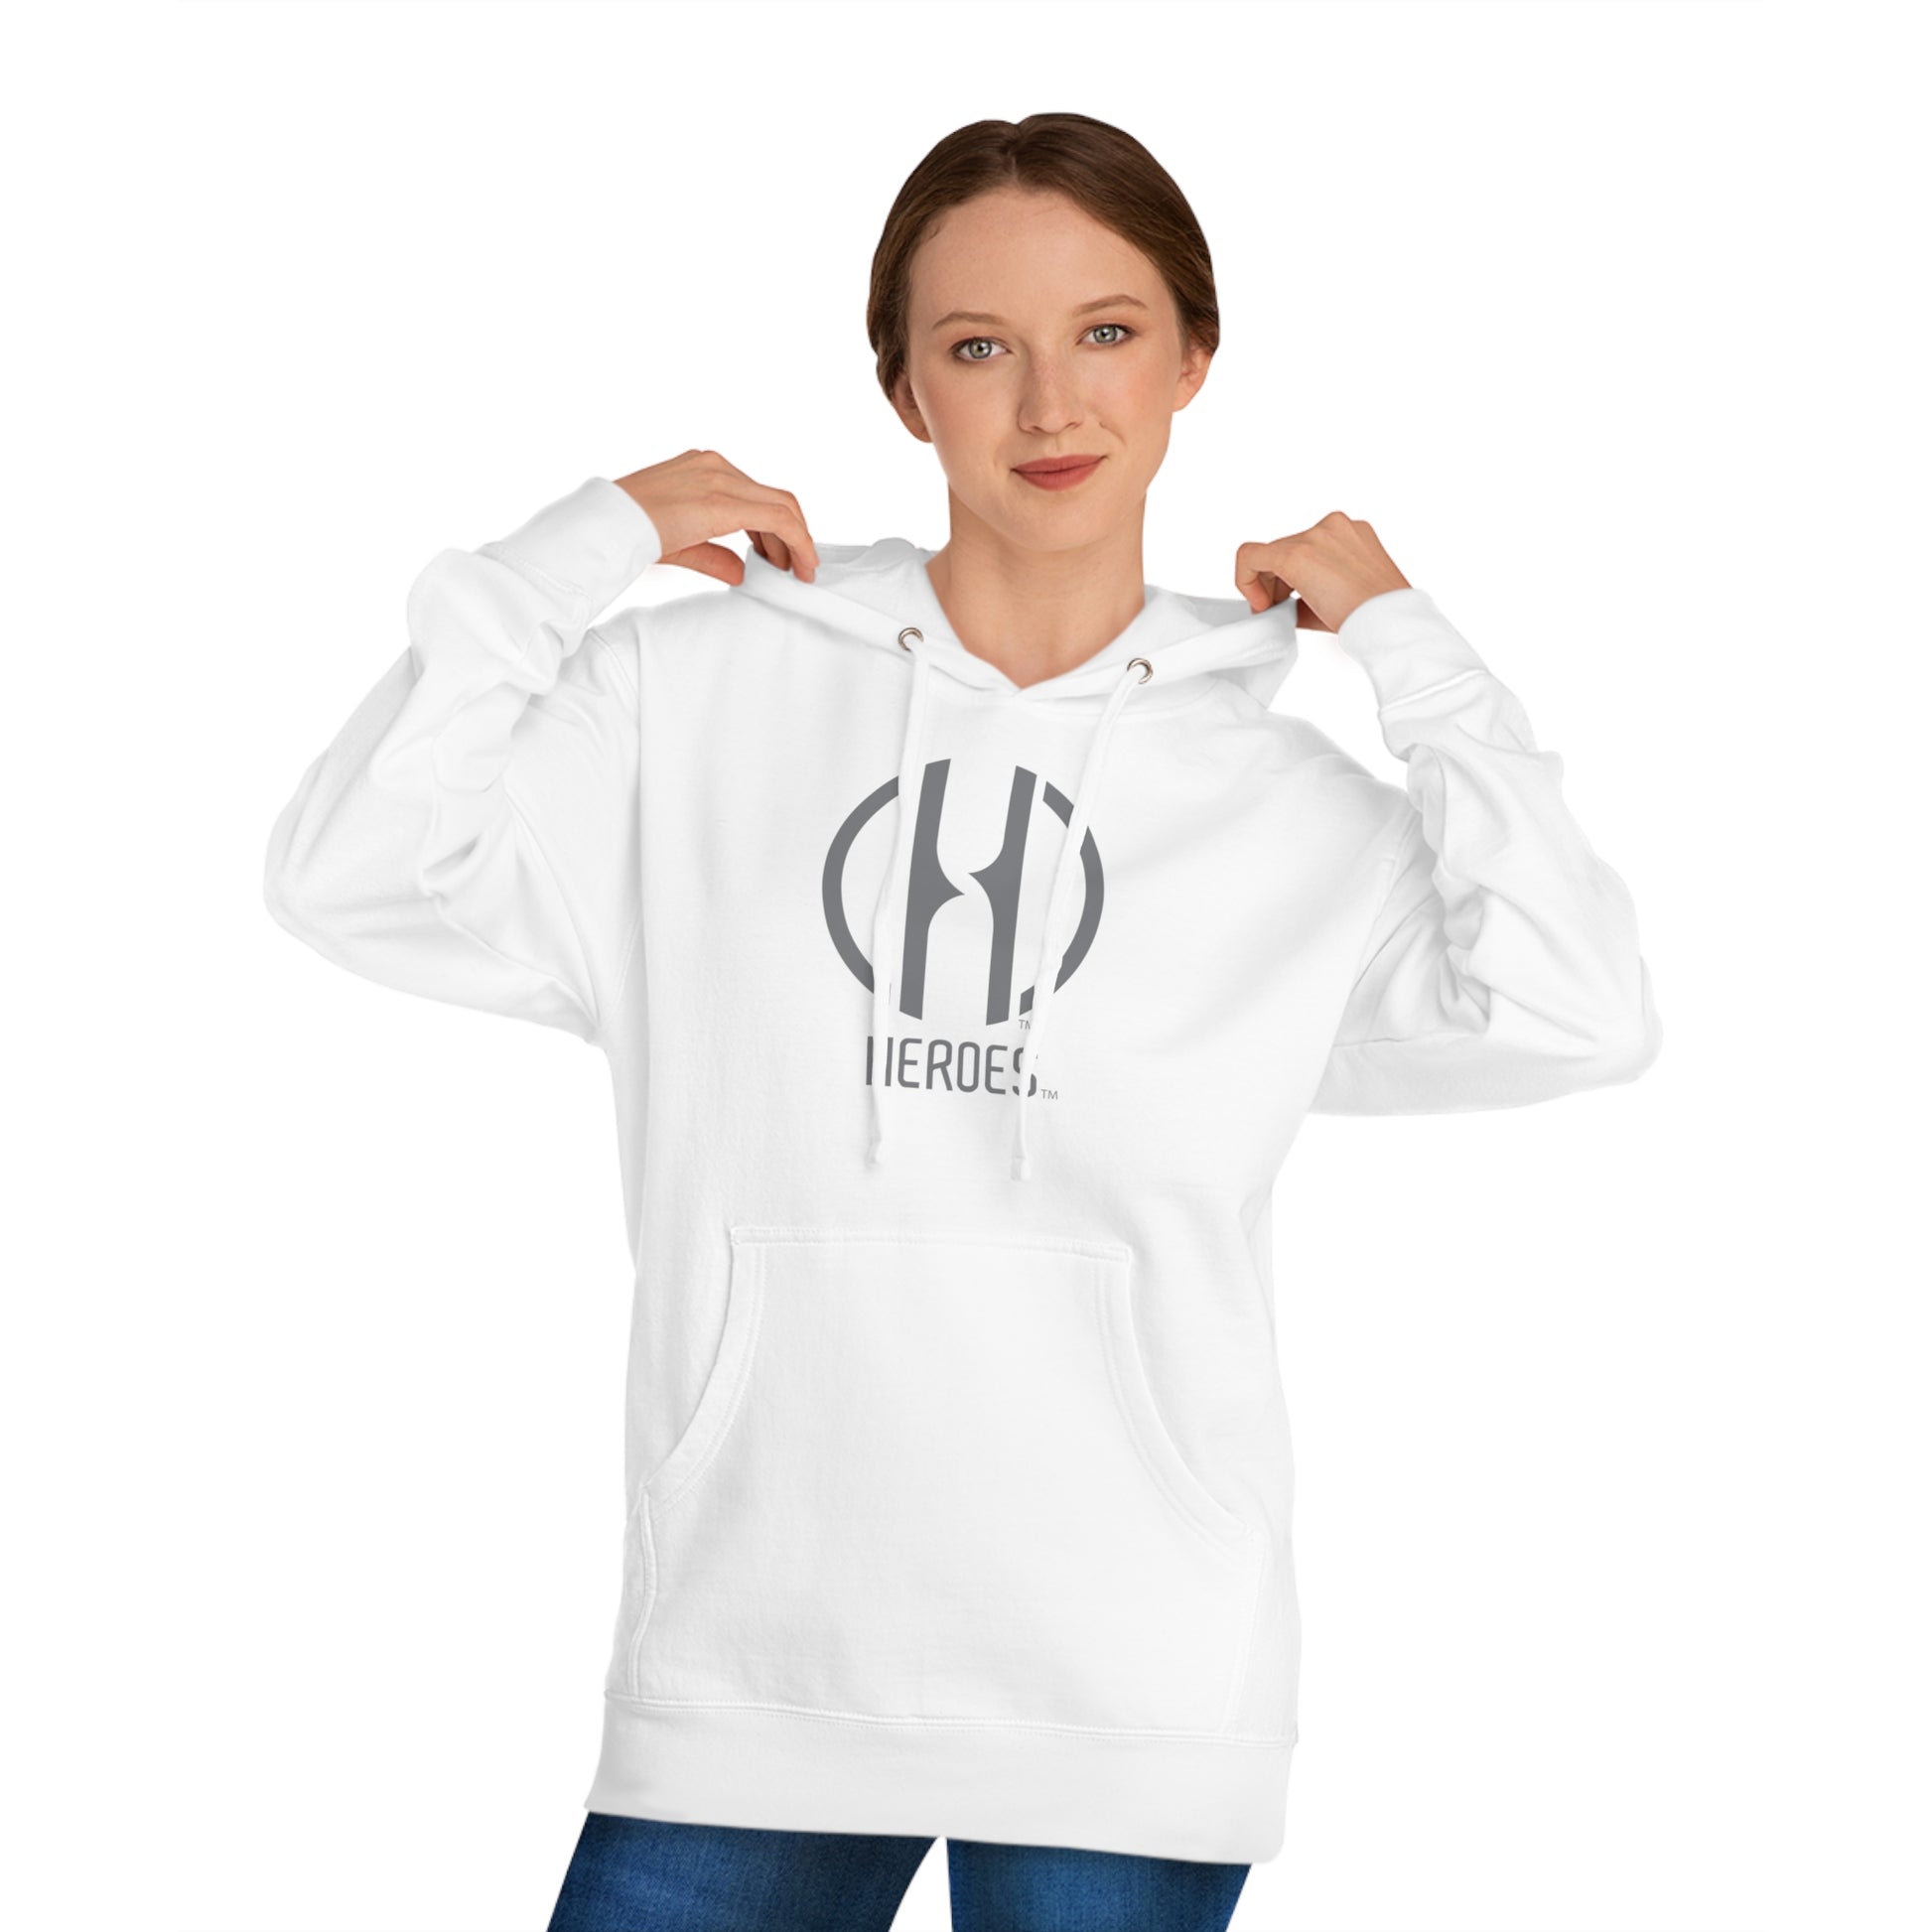 HEROES Unisex Hooded Sweatshirt - Making It Happen Foundation Inc.